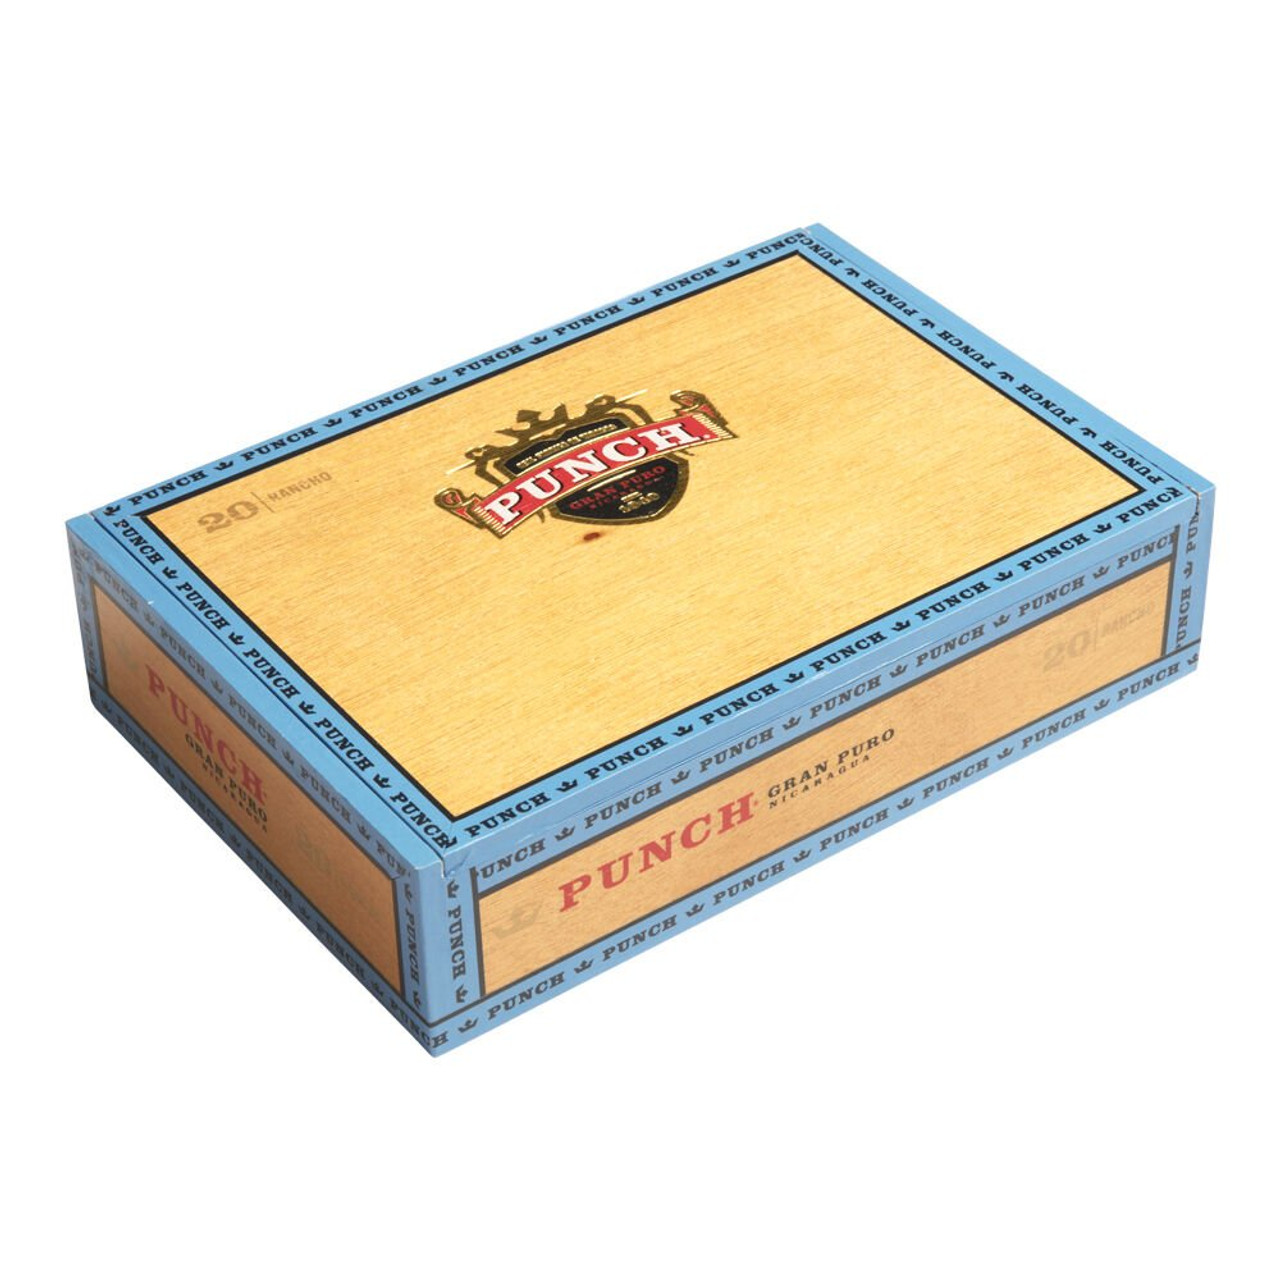 Punch Gran Puro Nicaragua Cigars - 6 x 54 (Box of 20)